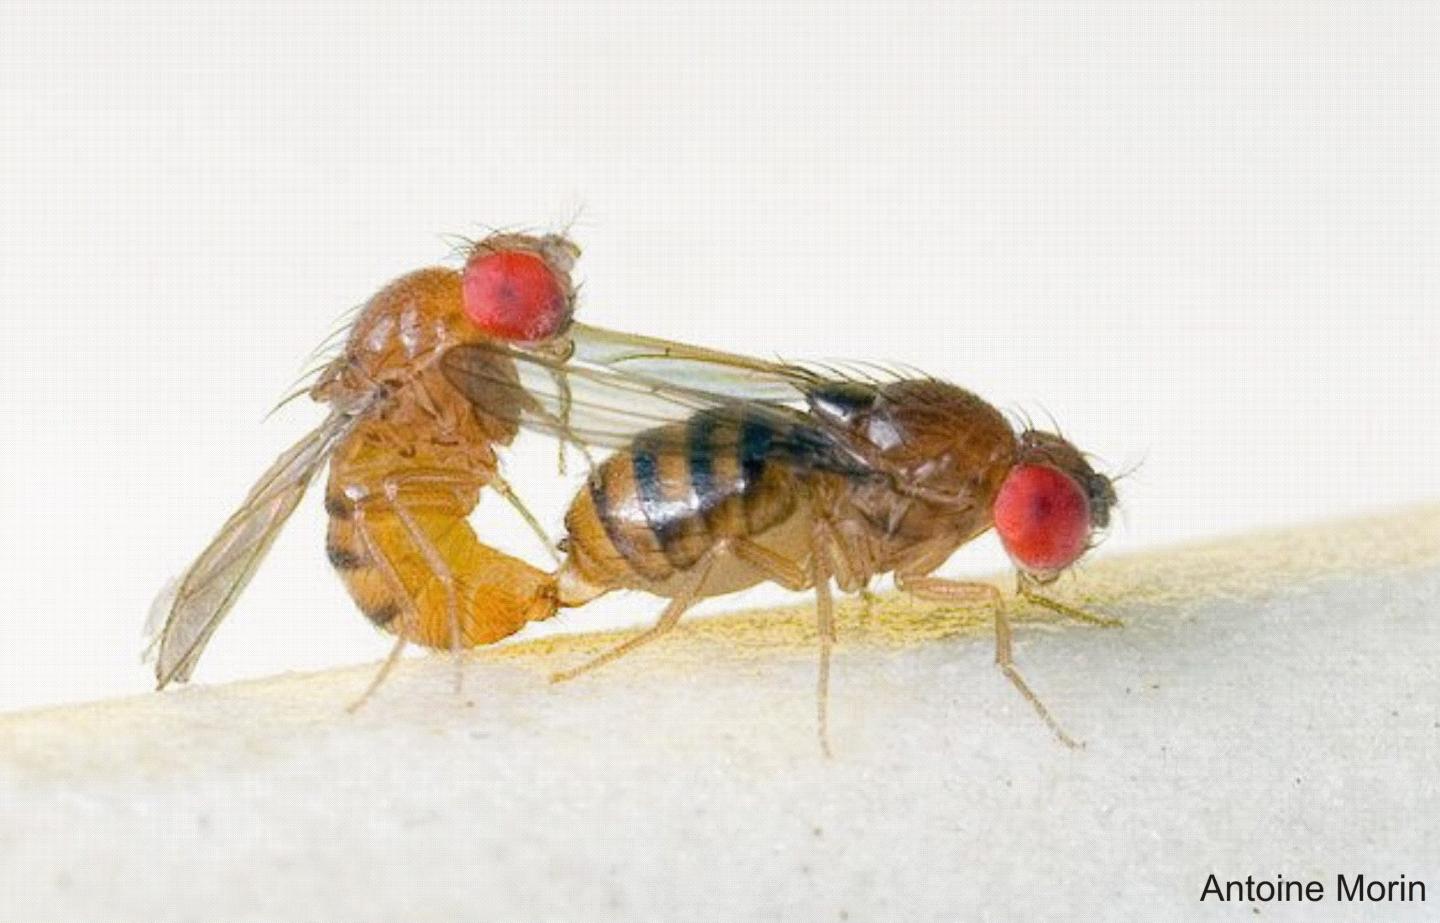 Mating Pair of <i>Drosophila serrata</i>